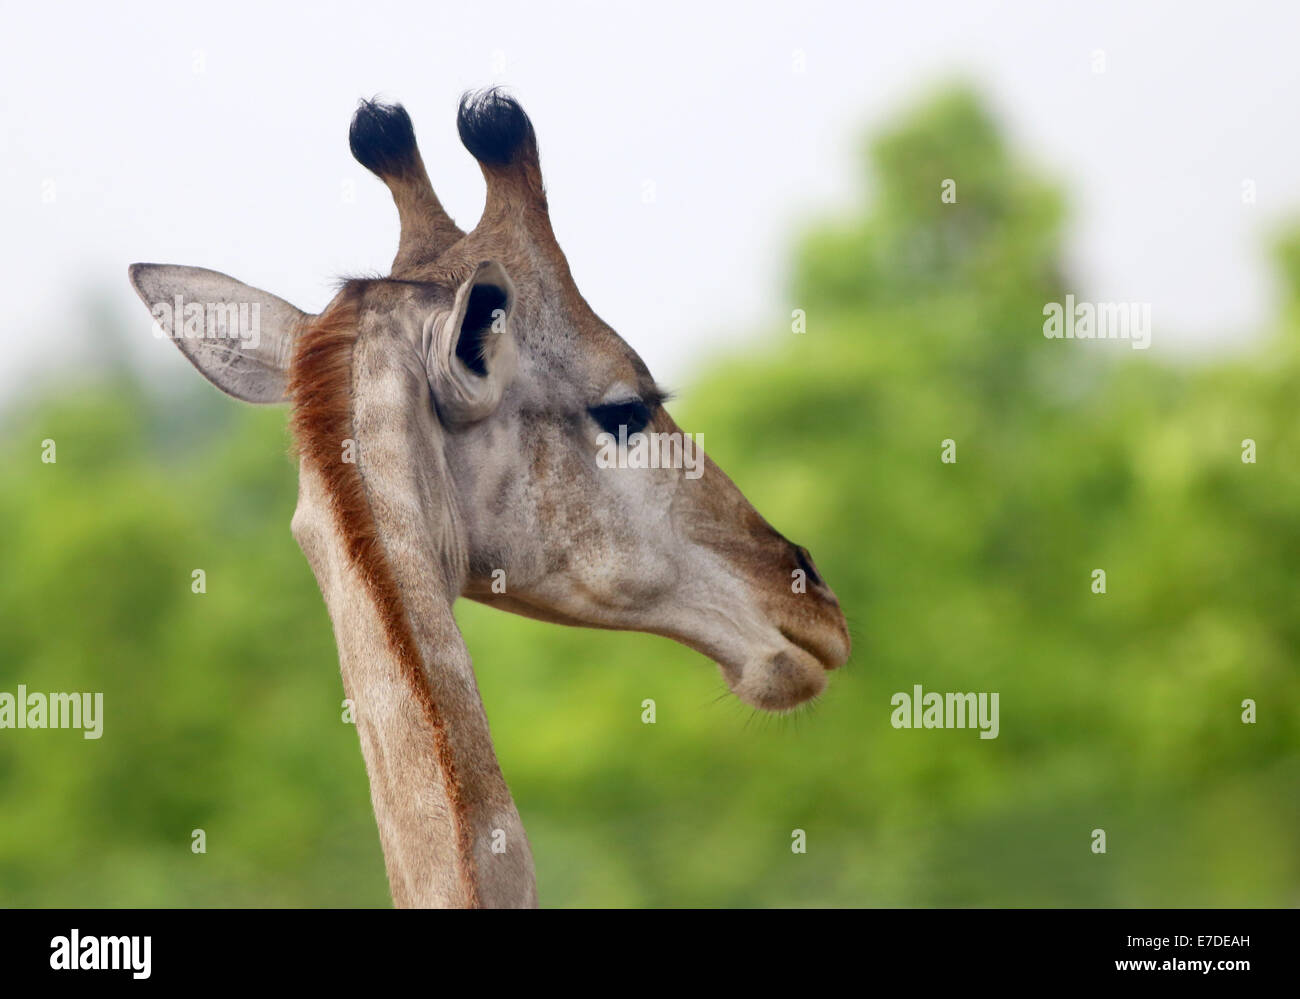 Giraffe head with selective focus Stock Photo